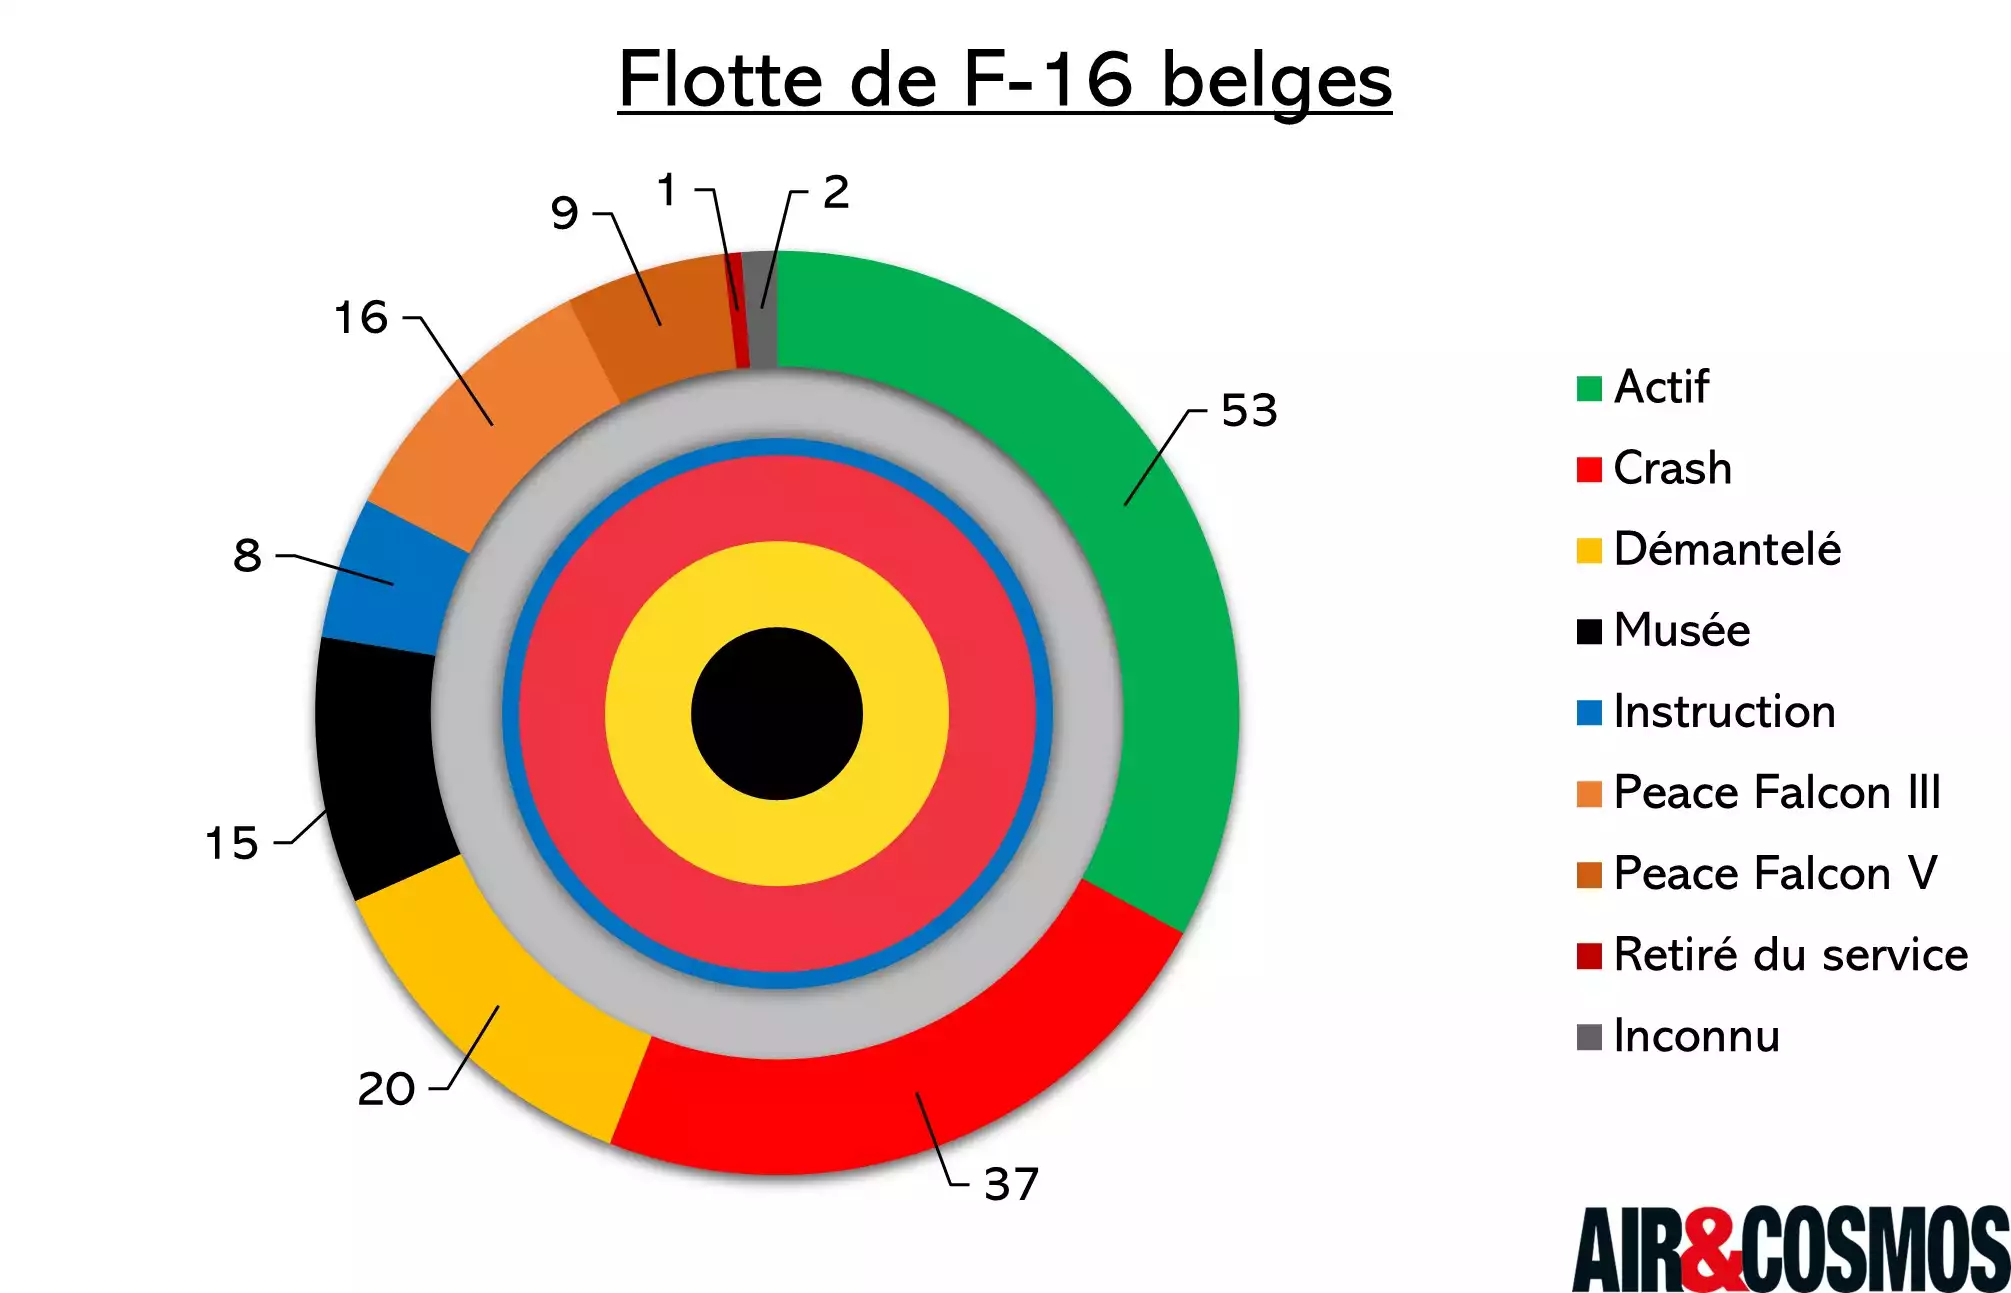 État de la flotte de F-16 belge.